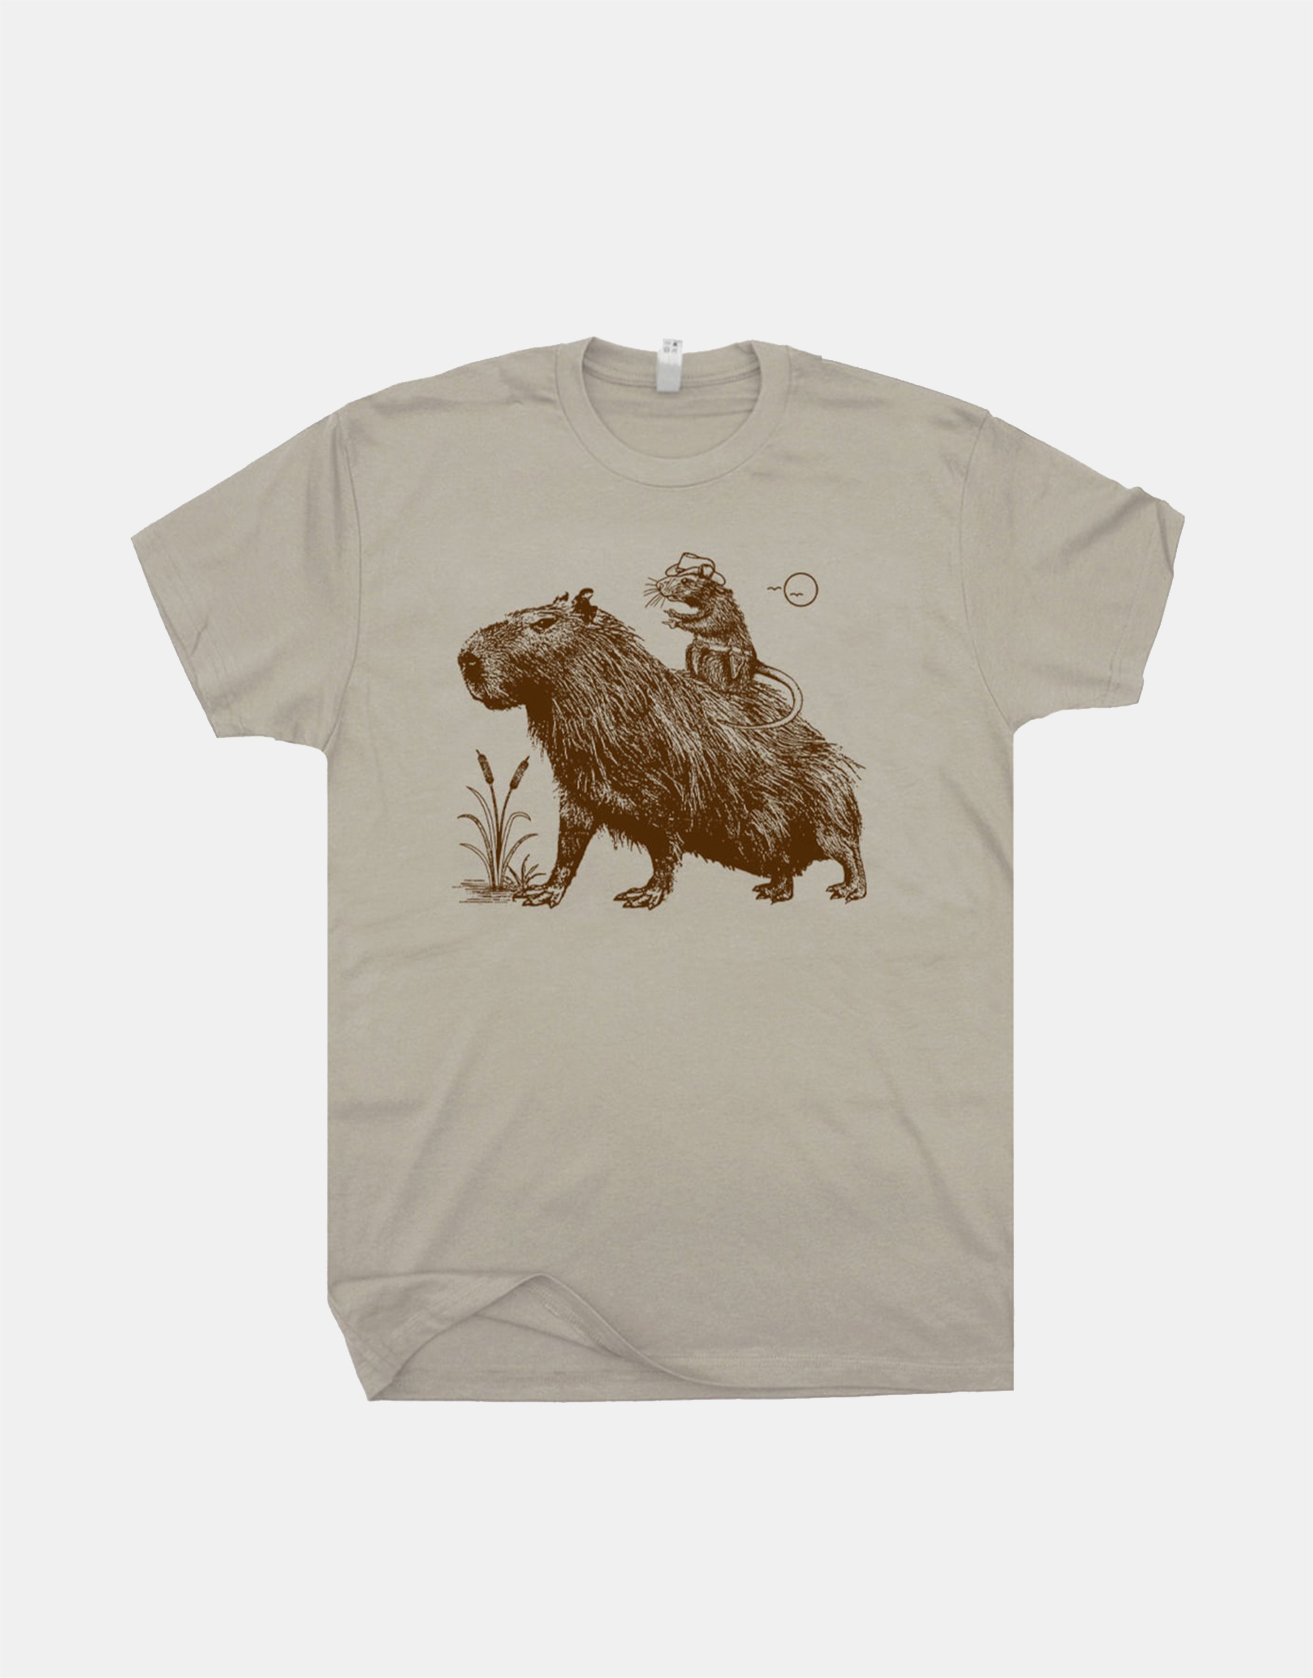 Capybara Shirt Rodent Shirts Funny Capybara Shirts / TECHWEAR CLUB / Techwear